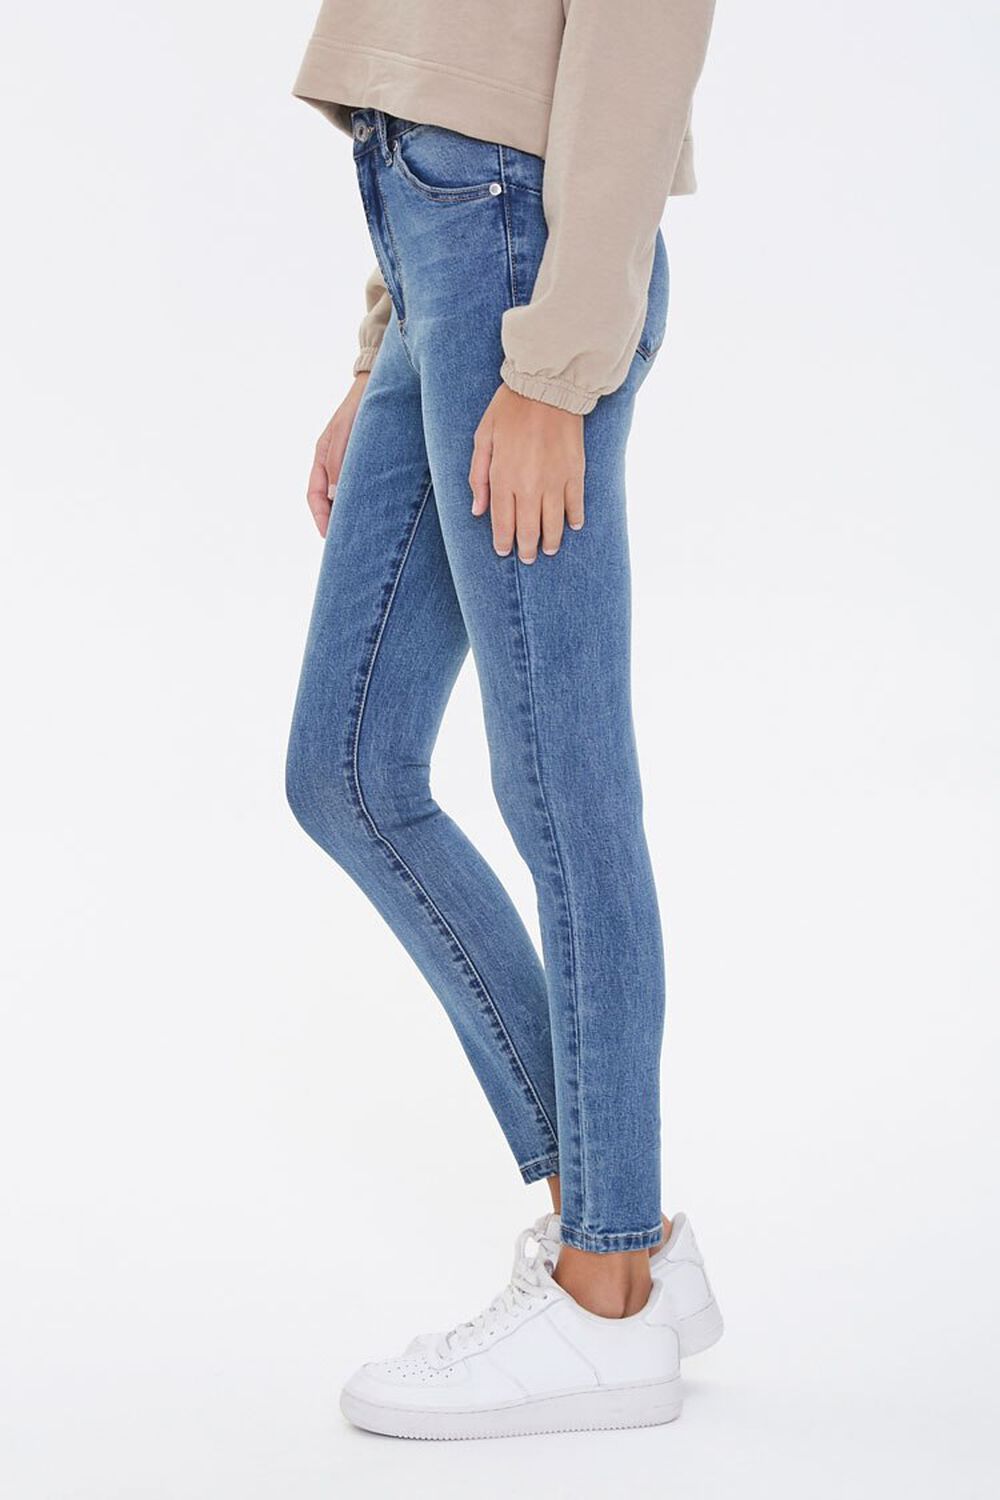 MEDIUM DENIM Uplyfter High-Rise Jeans, image 3